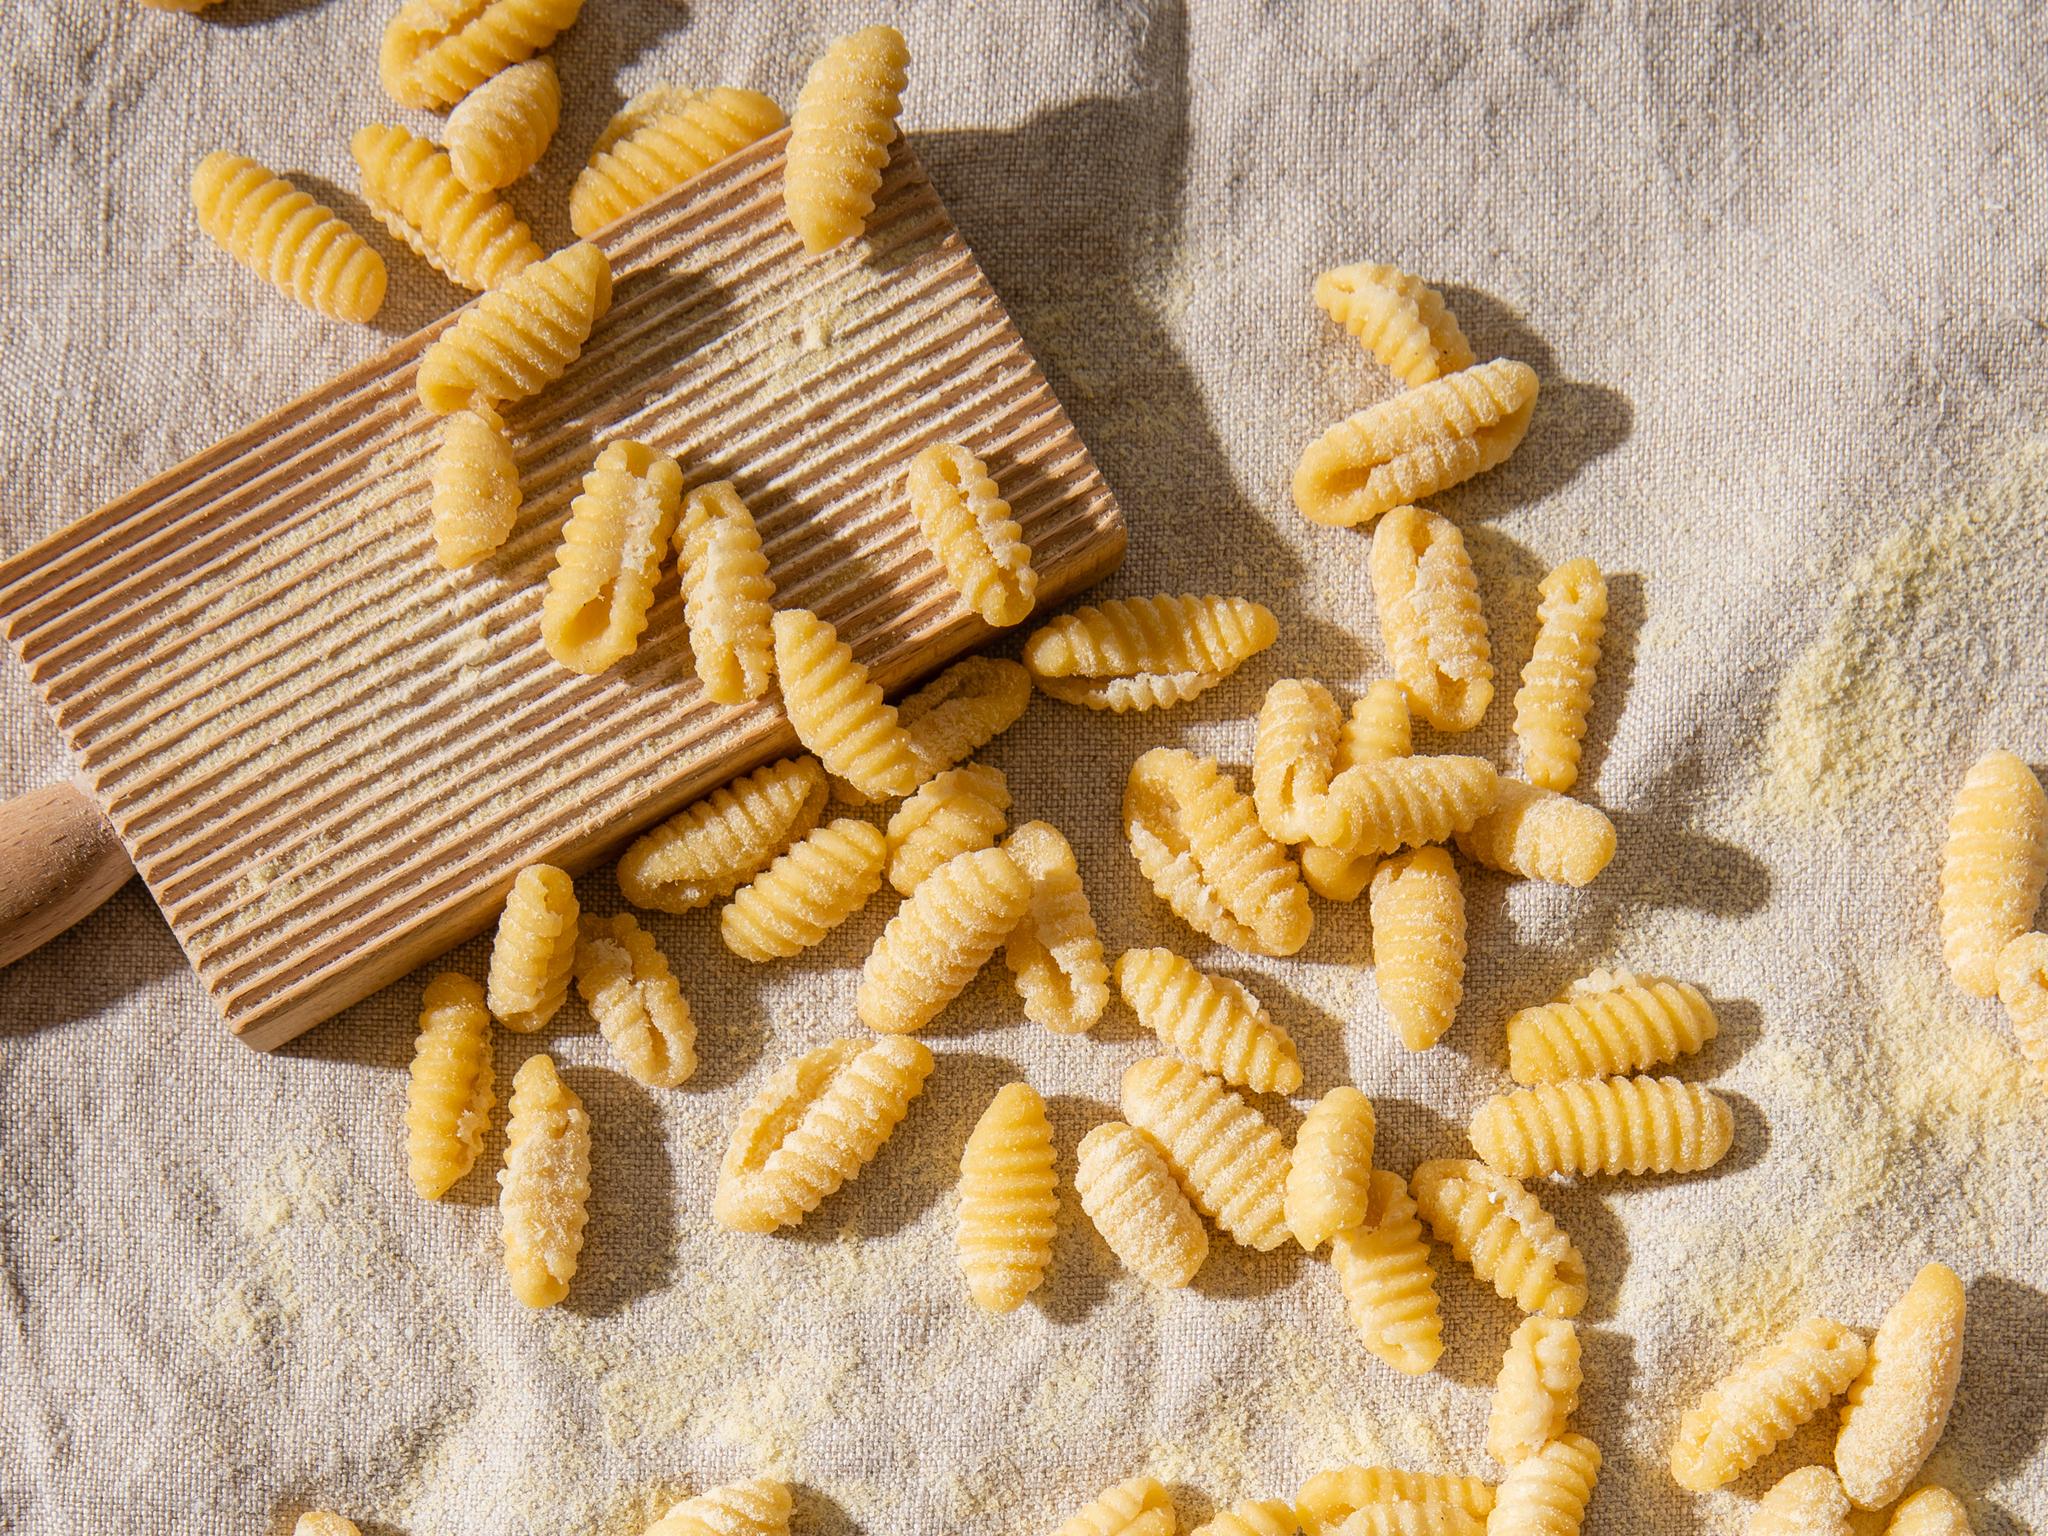 Elizabeth Hewson shares how to master making her homemade Cavatelli pasta |  The Australian